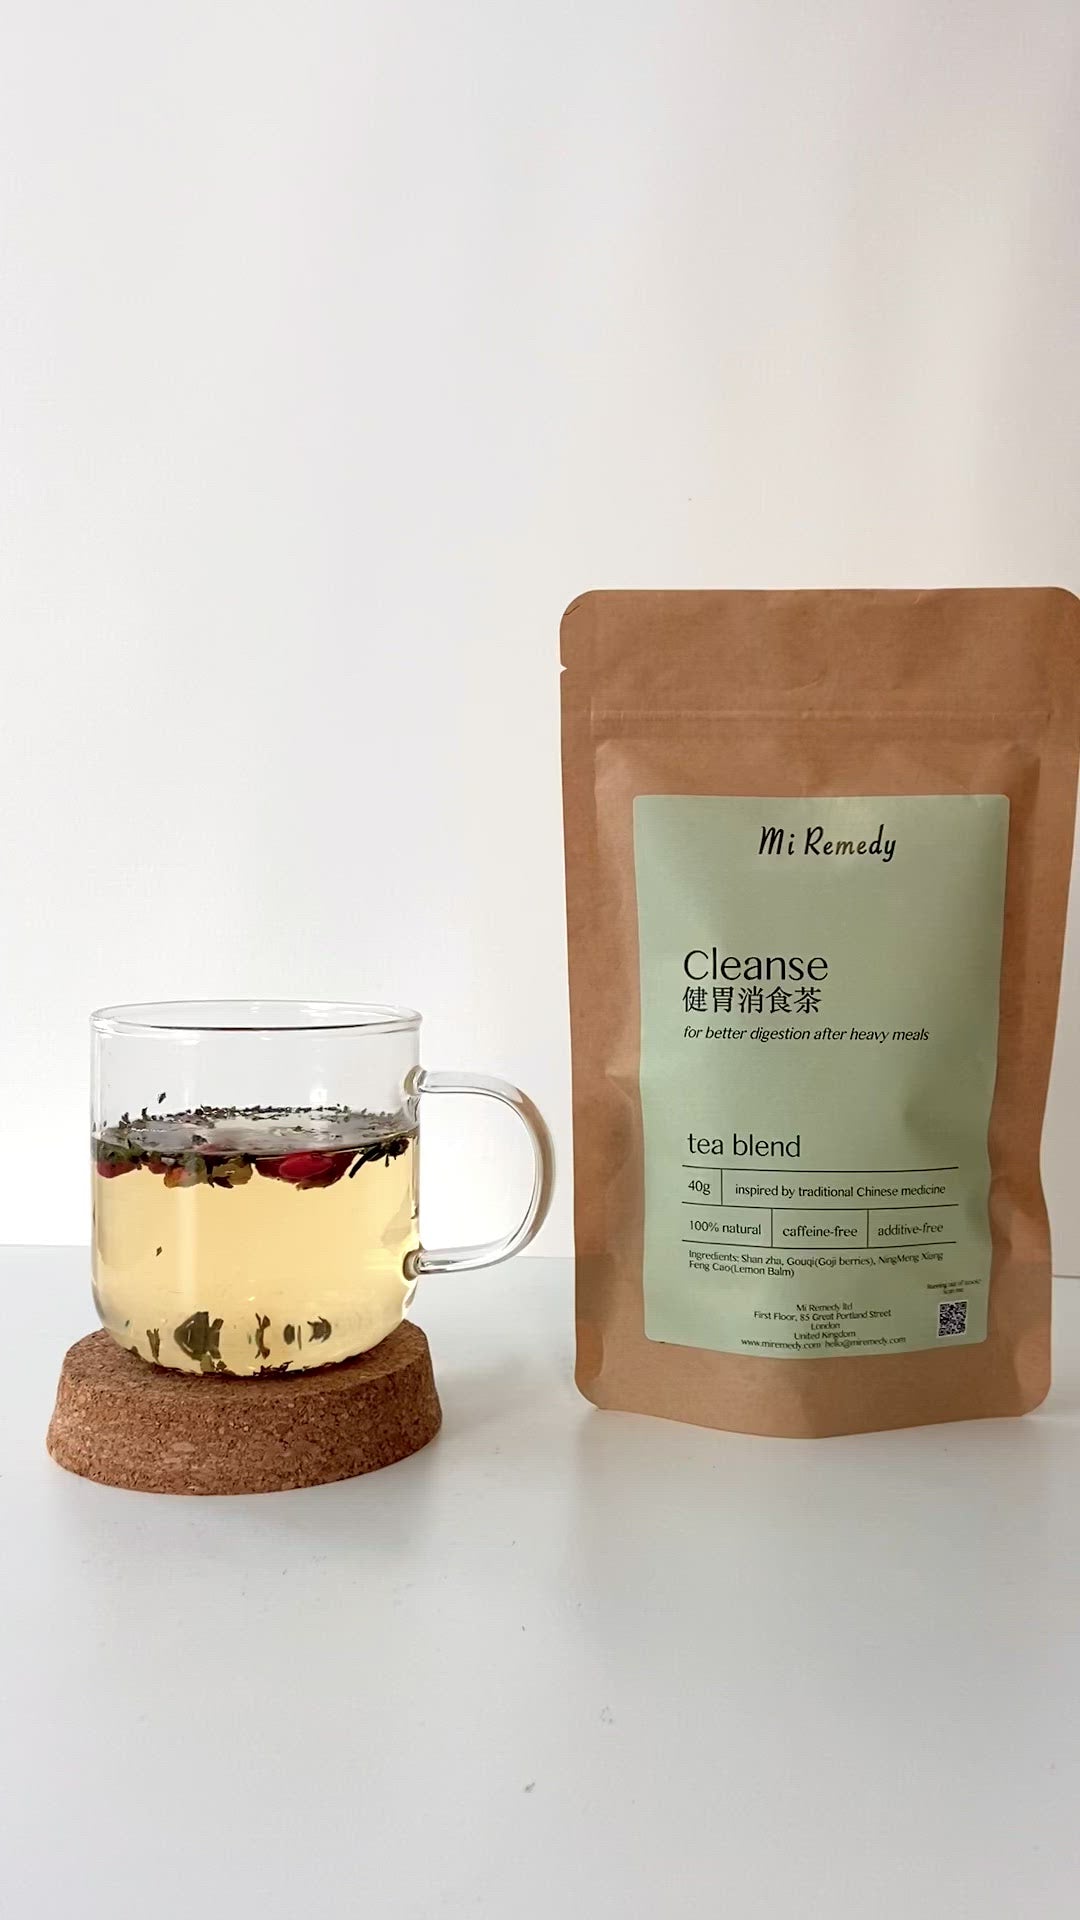 Cleanse tea 健胃消食茶